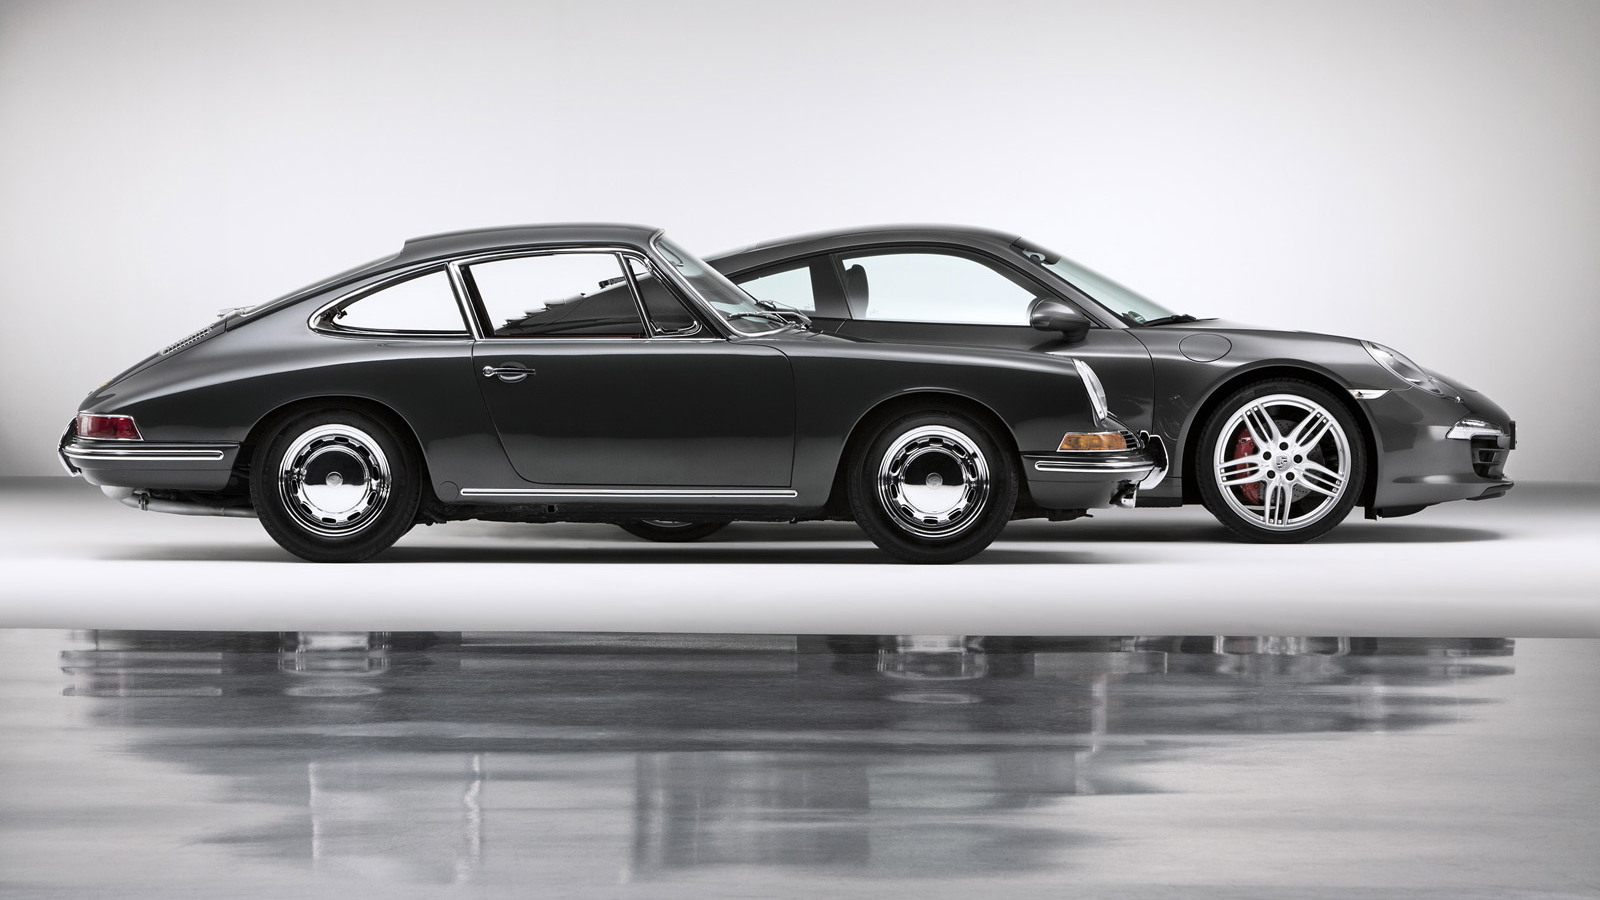 Original 1964 Porsche 911 and the Type-991 2013 Porsche 911 Carrera 4S